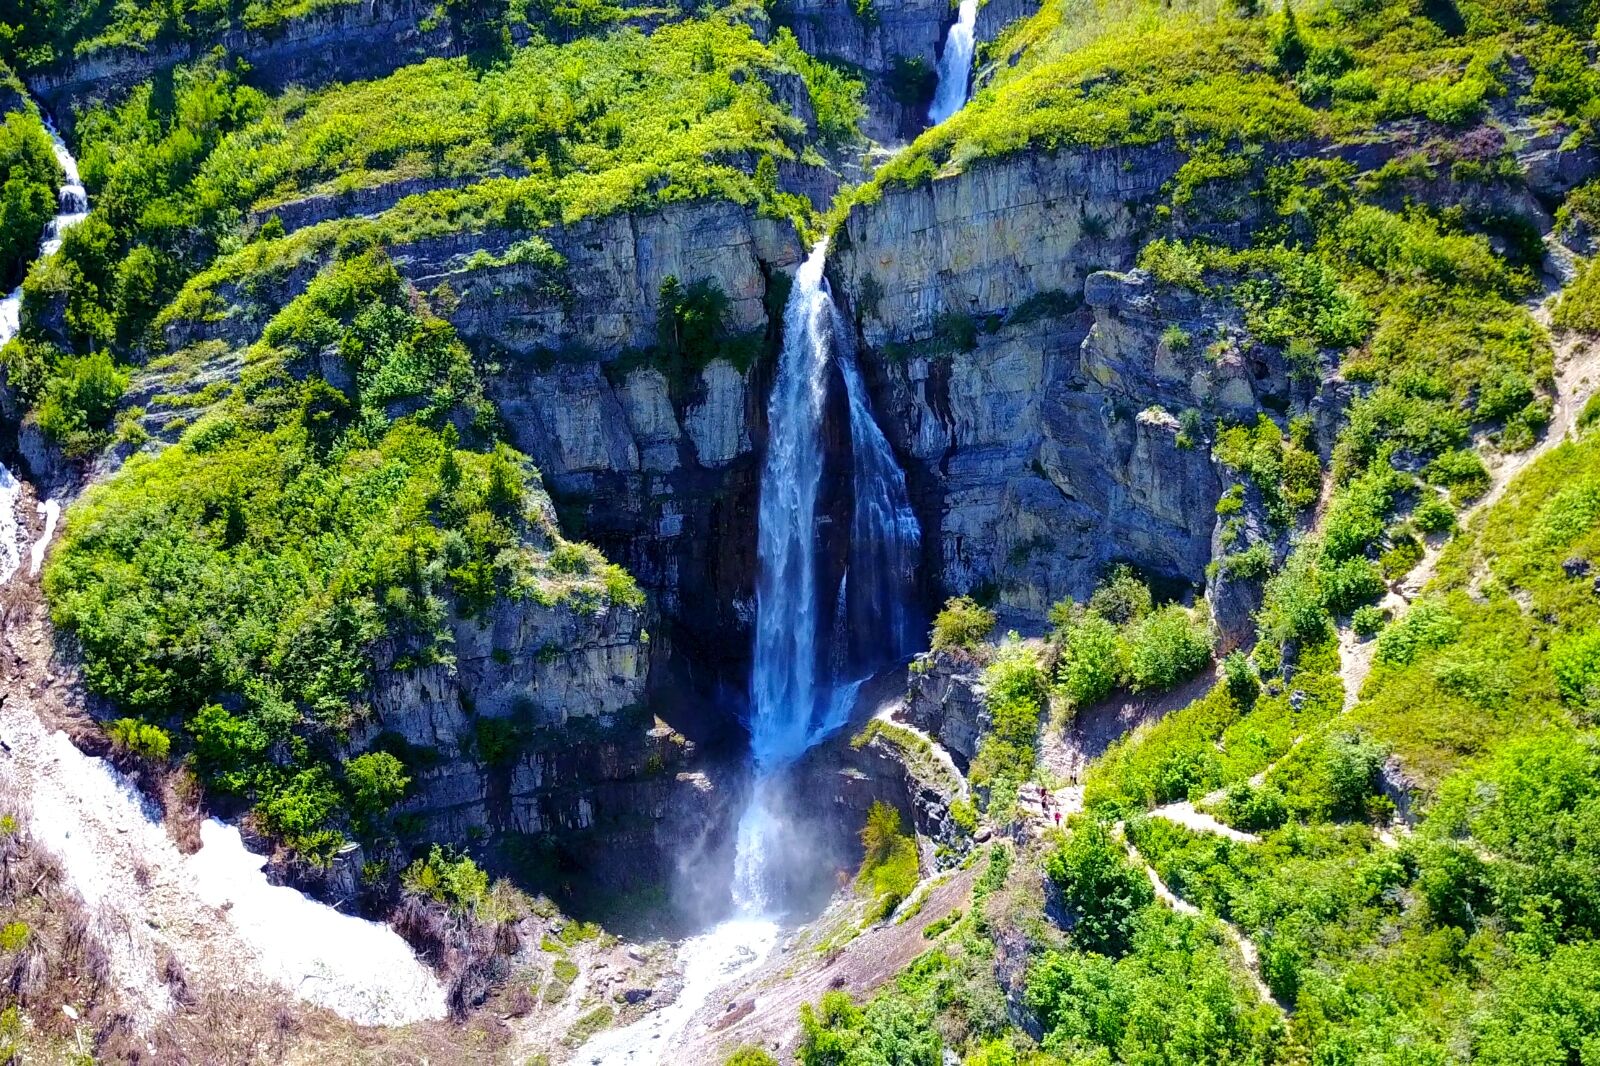 Stewart Falls one of the largest waterfalls in Utah